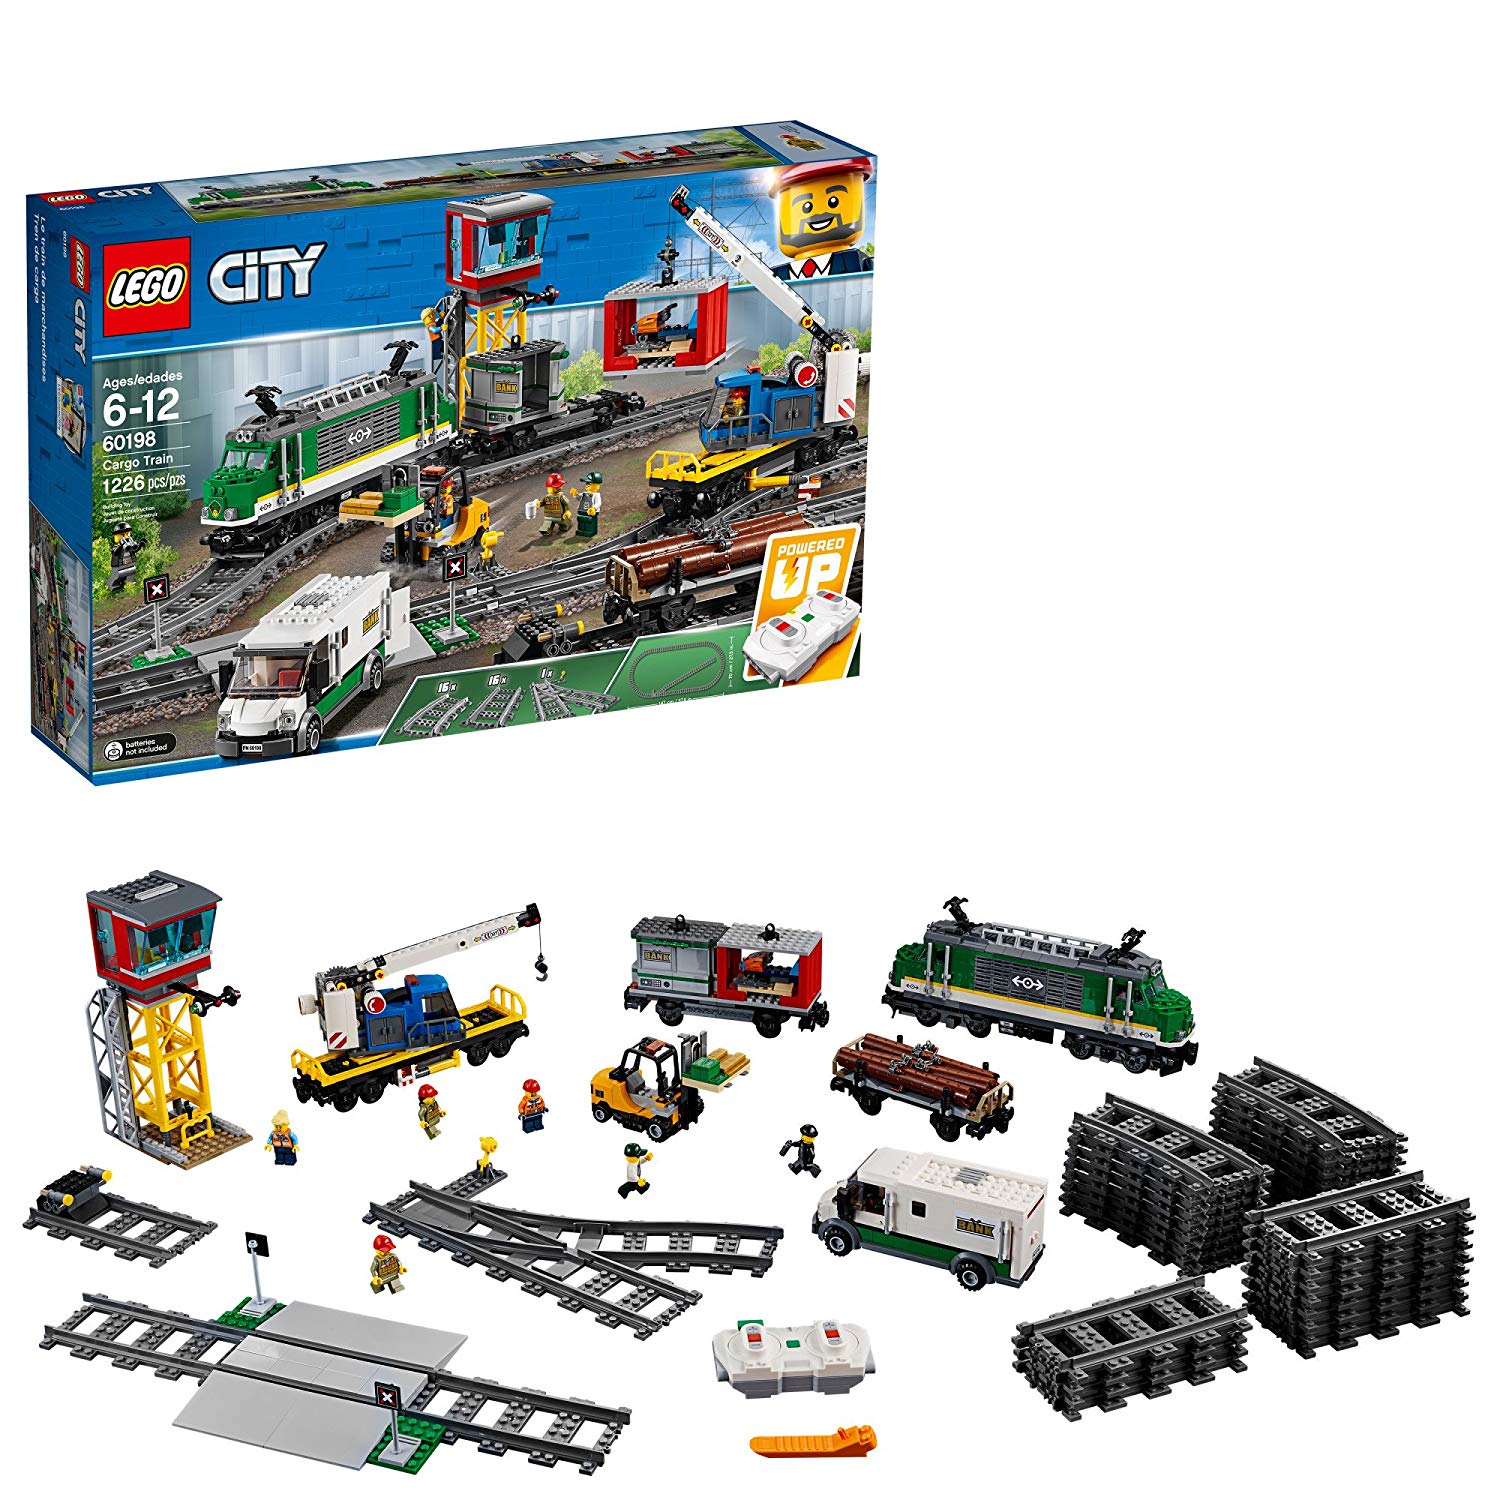 Lego City 60198 – Goods Train Set (1226) – 2018